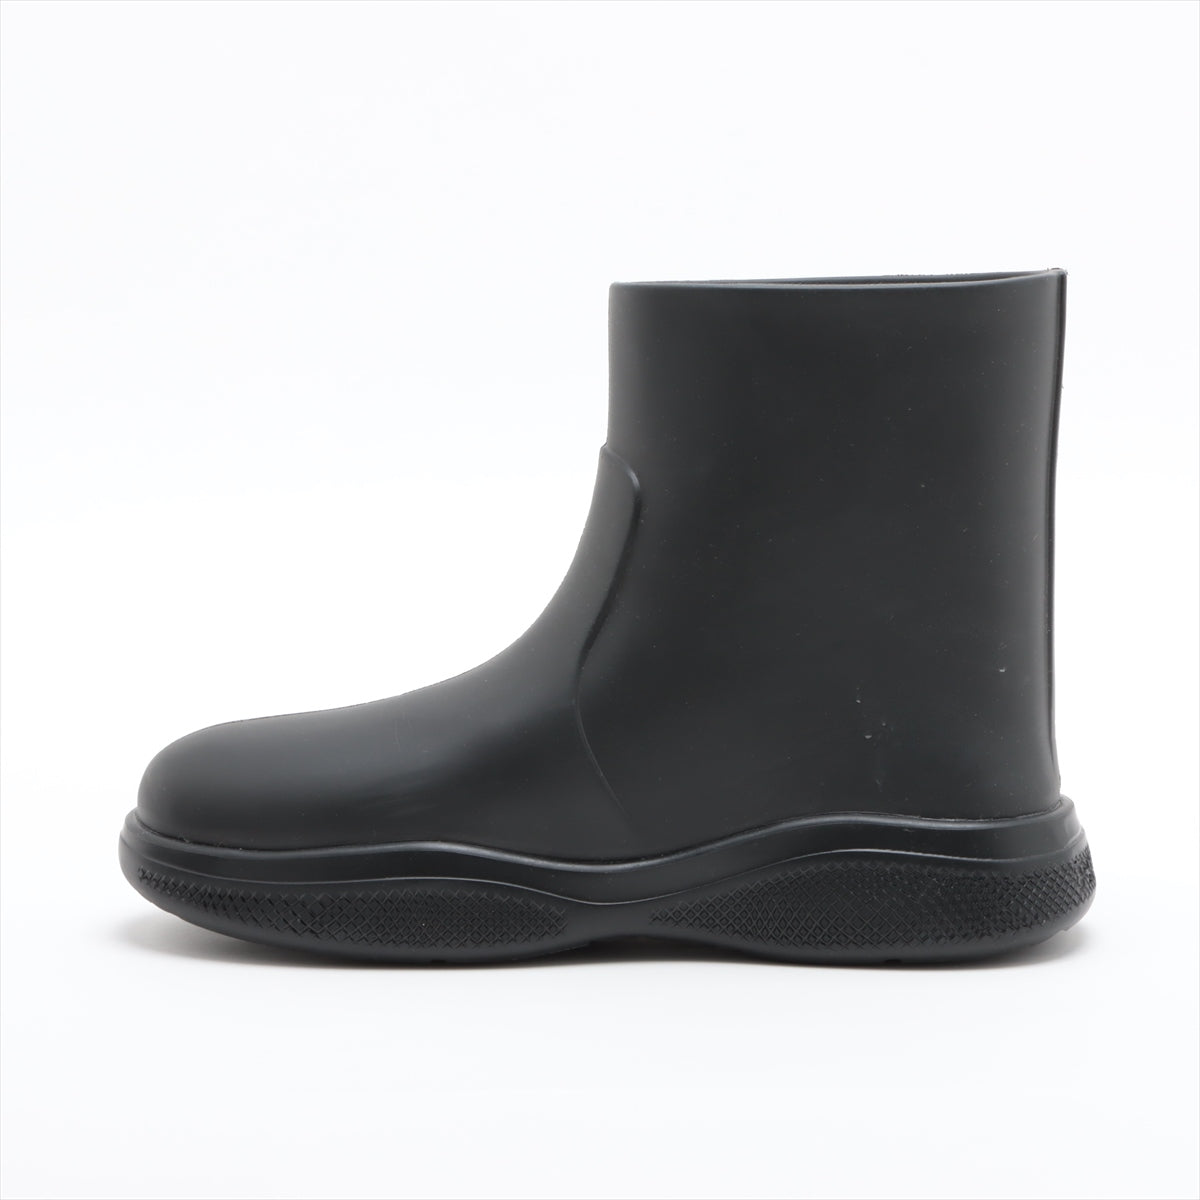 Prada Rubber Rain boots 36 Ladies' Black Triangle logo